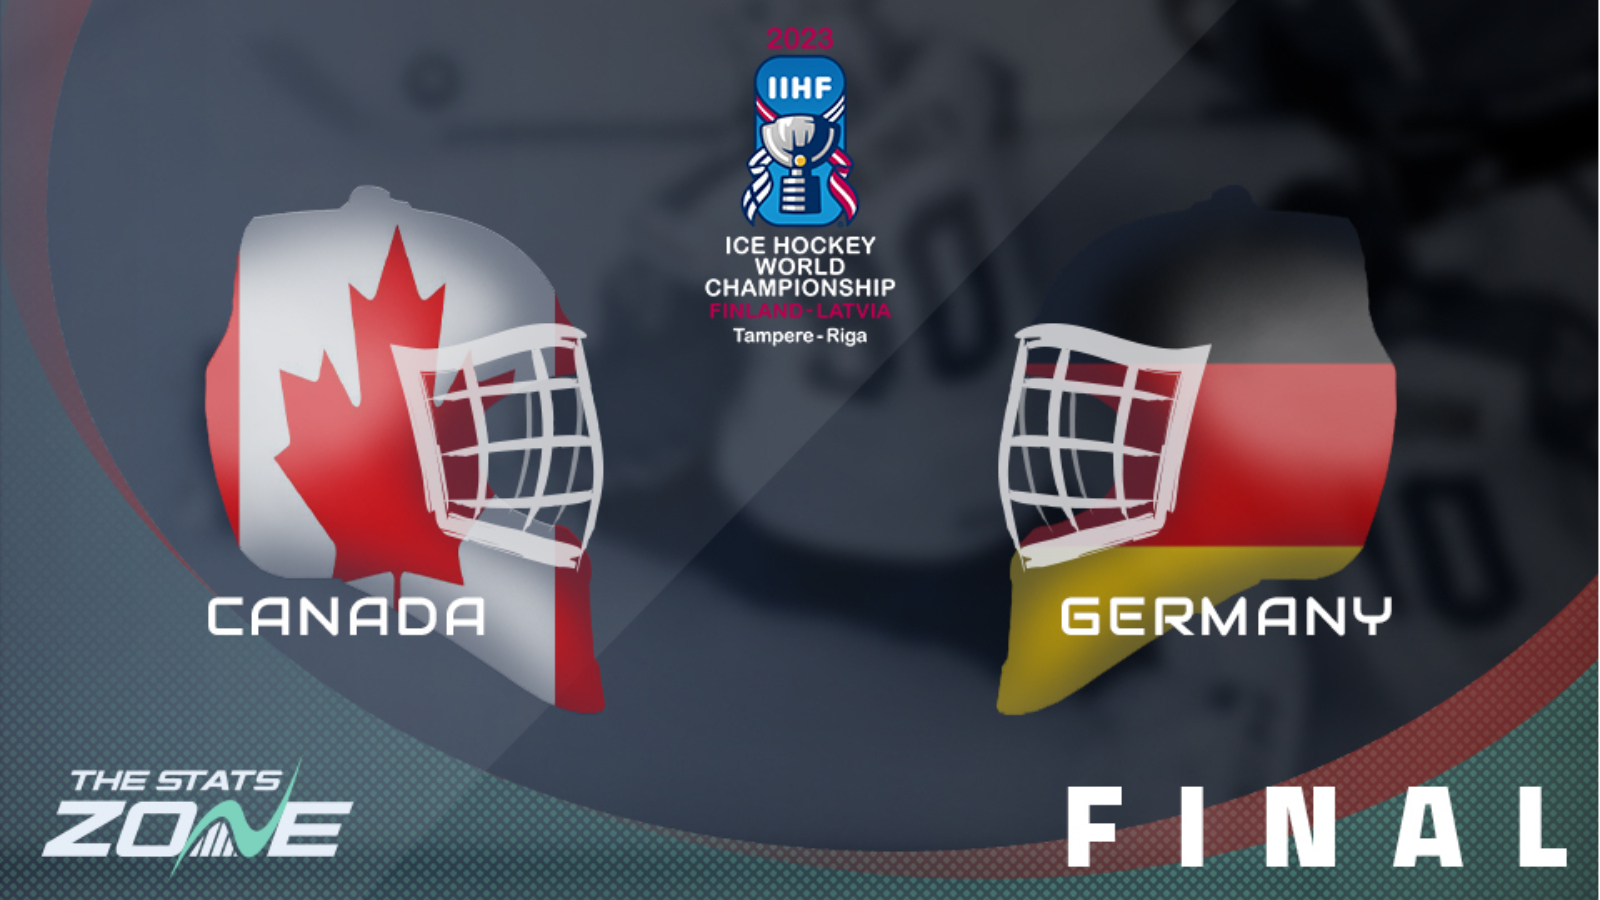 Germany vs Canada – Final